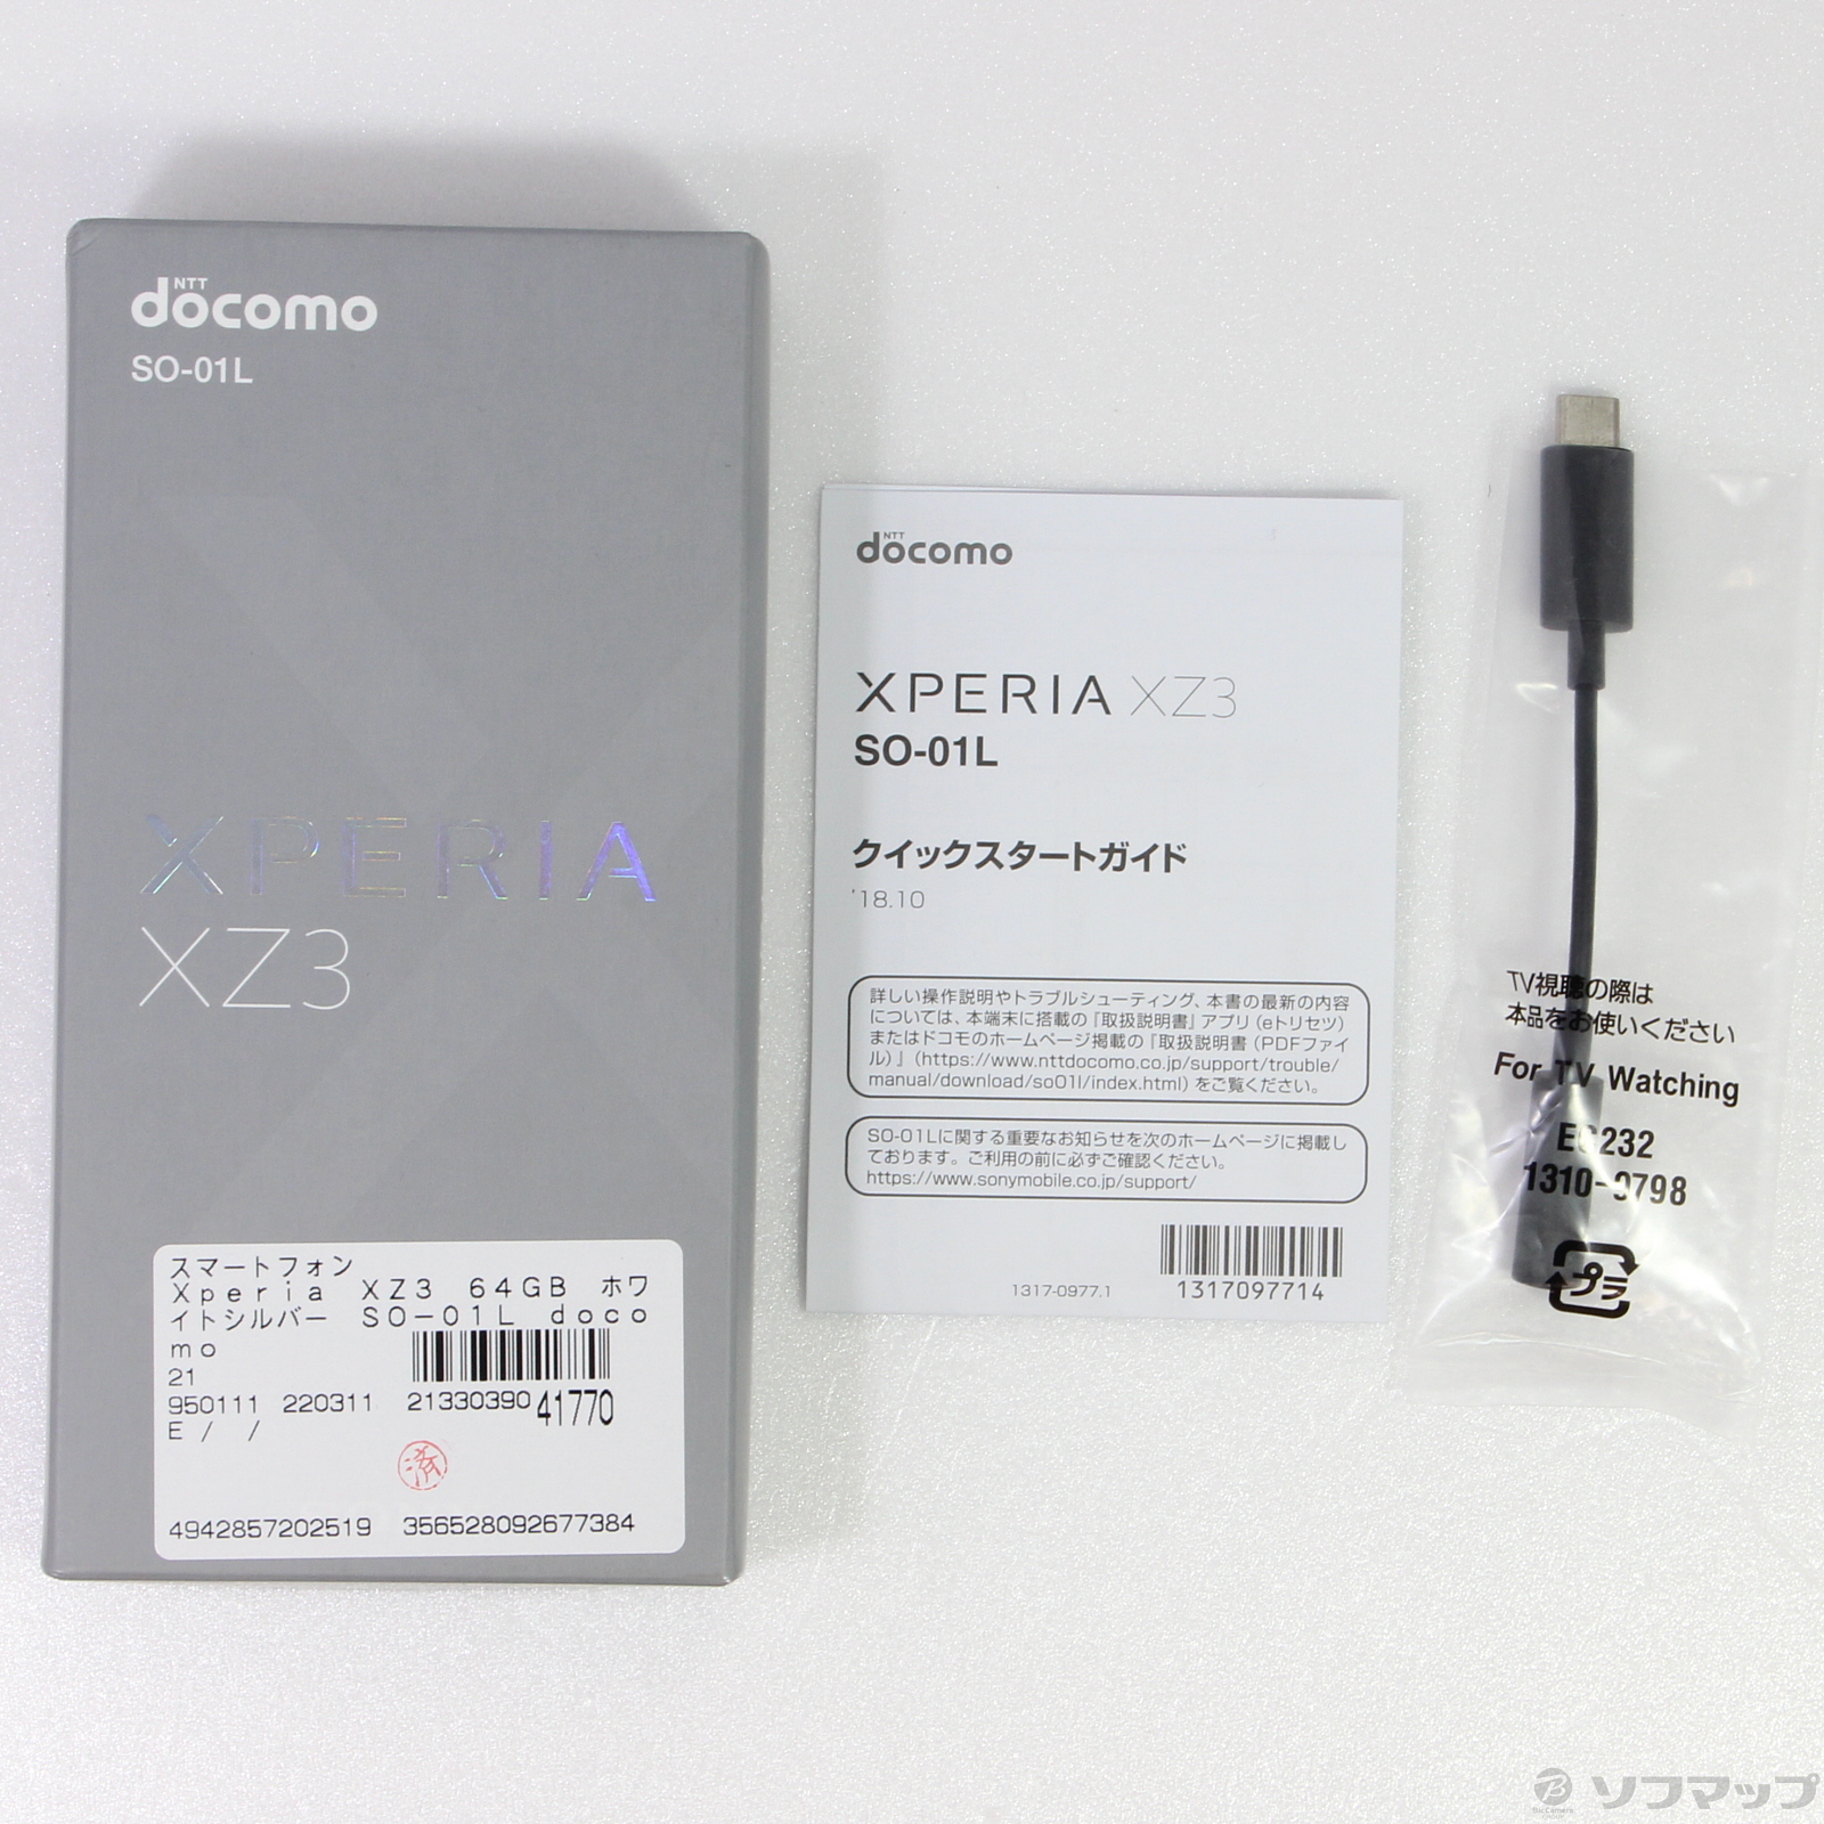 Xperia XZ3 White Silver 64 GB docomo - スマートフォン/携帯電話